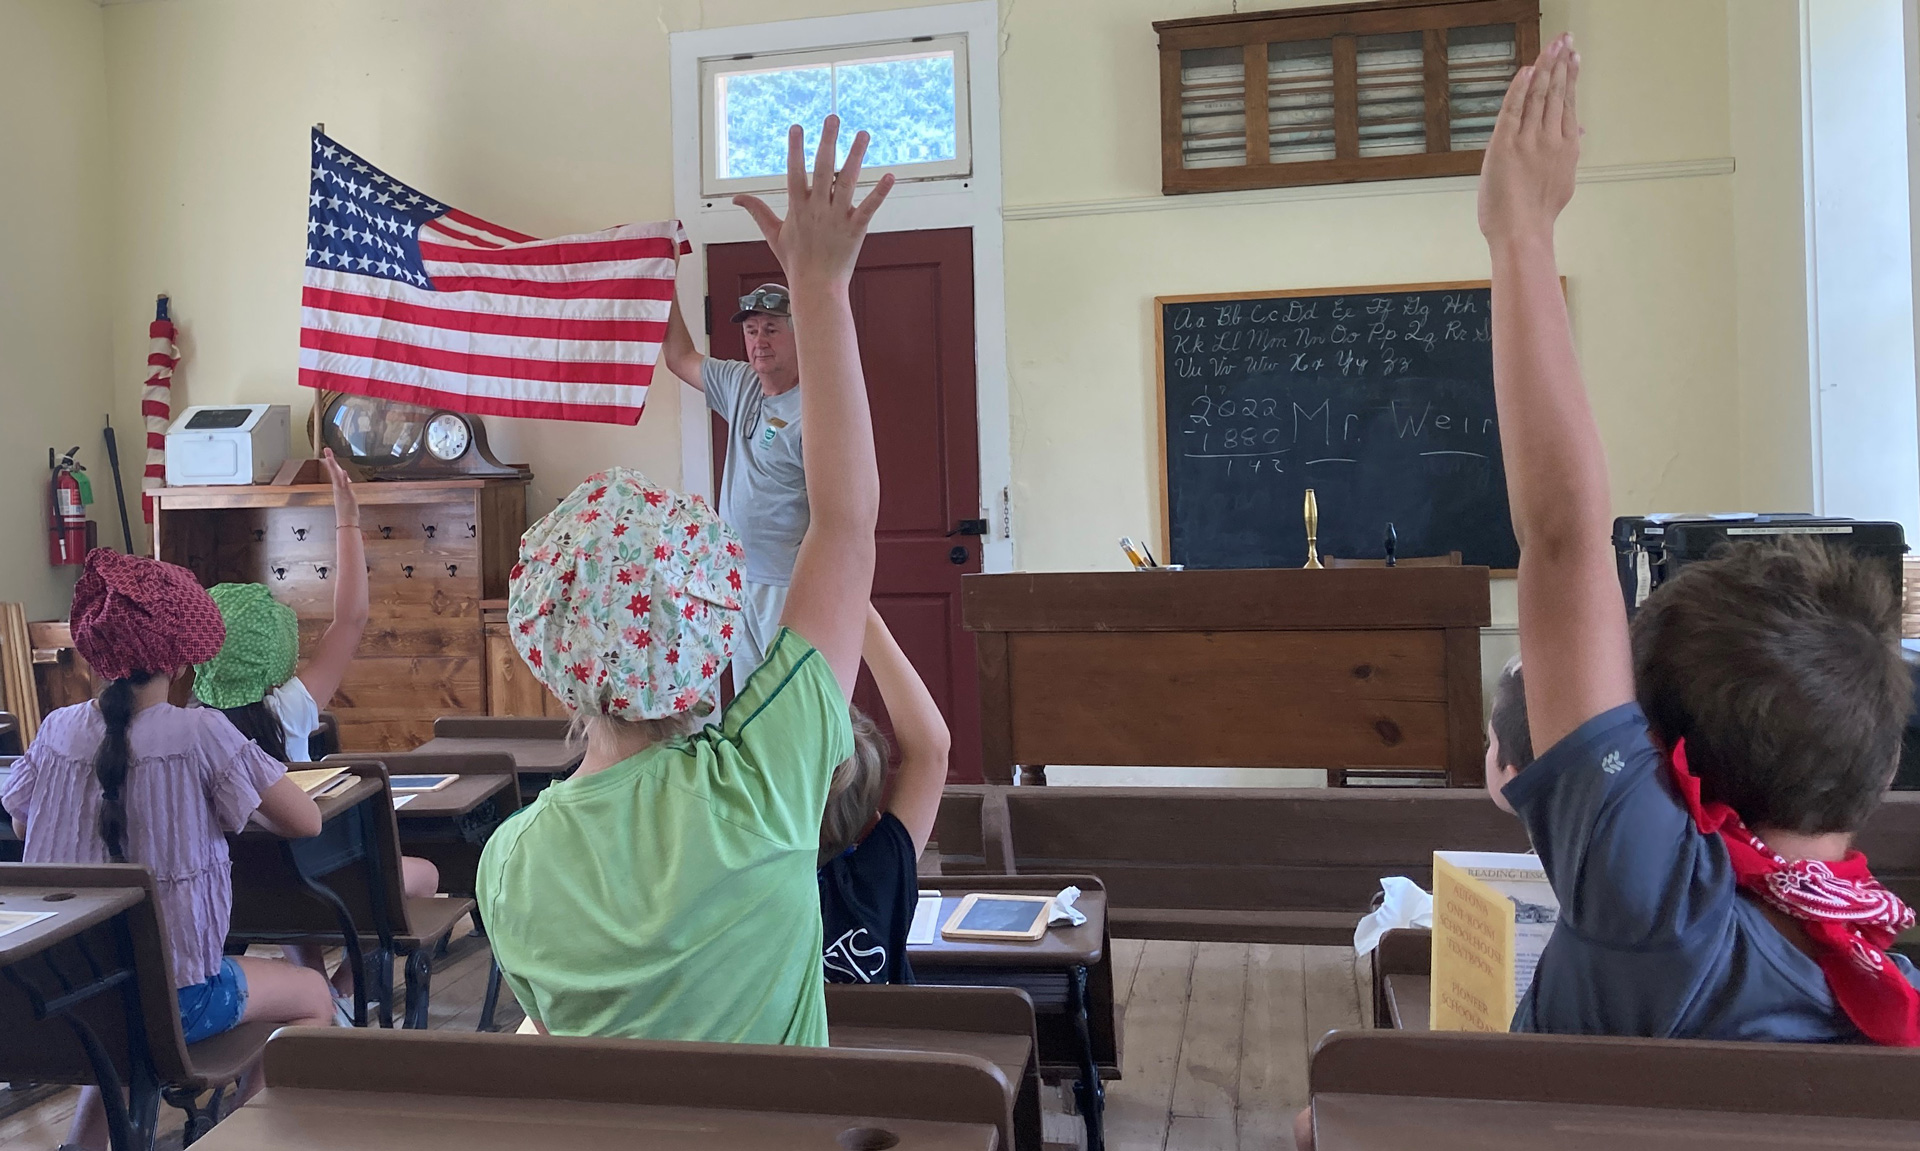 A group of children raise their hands inside the historic Altona Schoolhouse